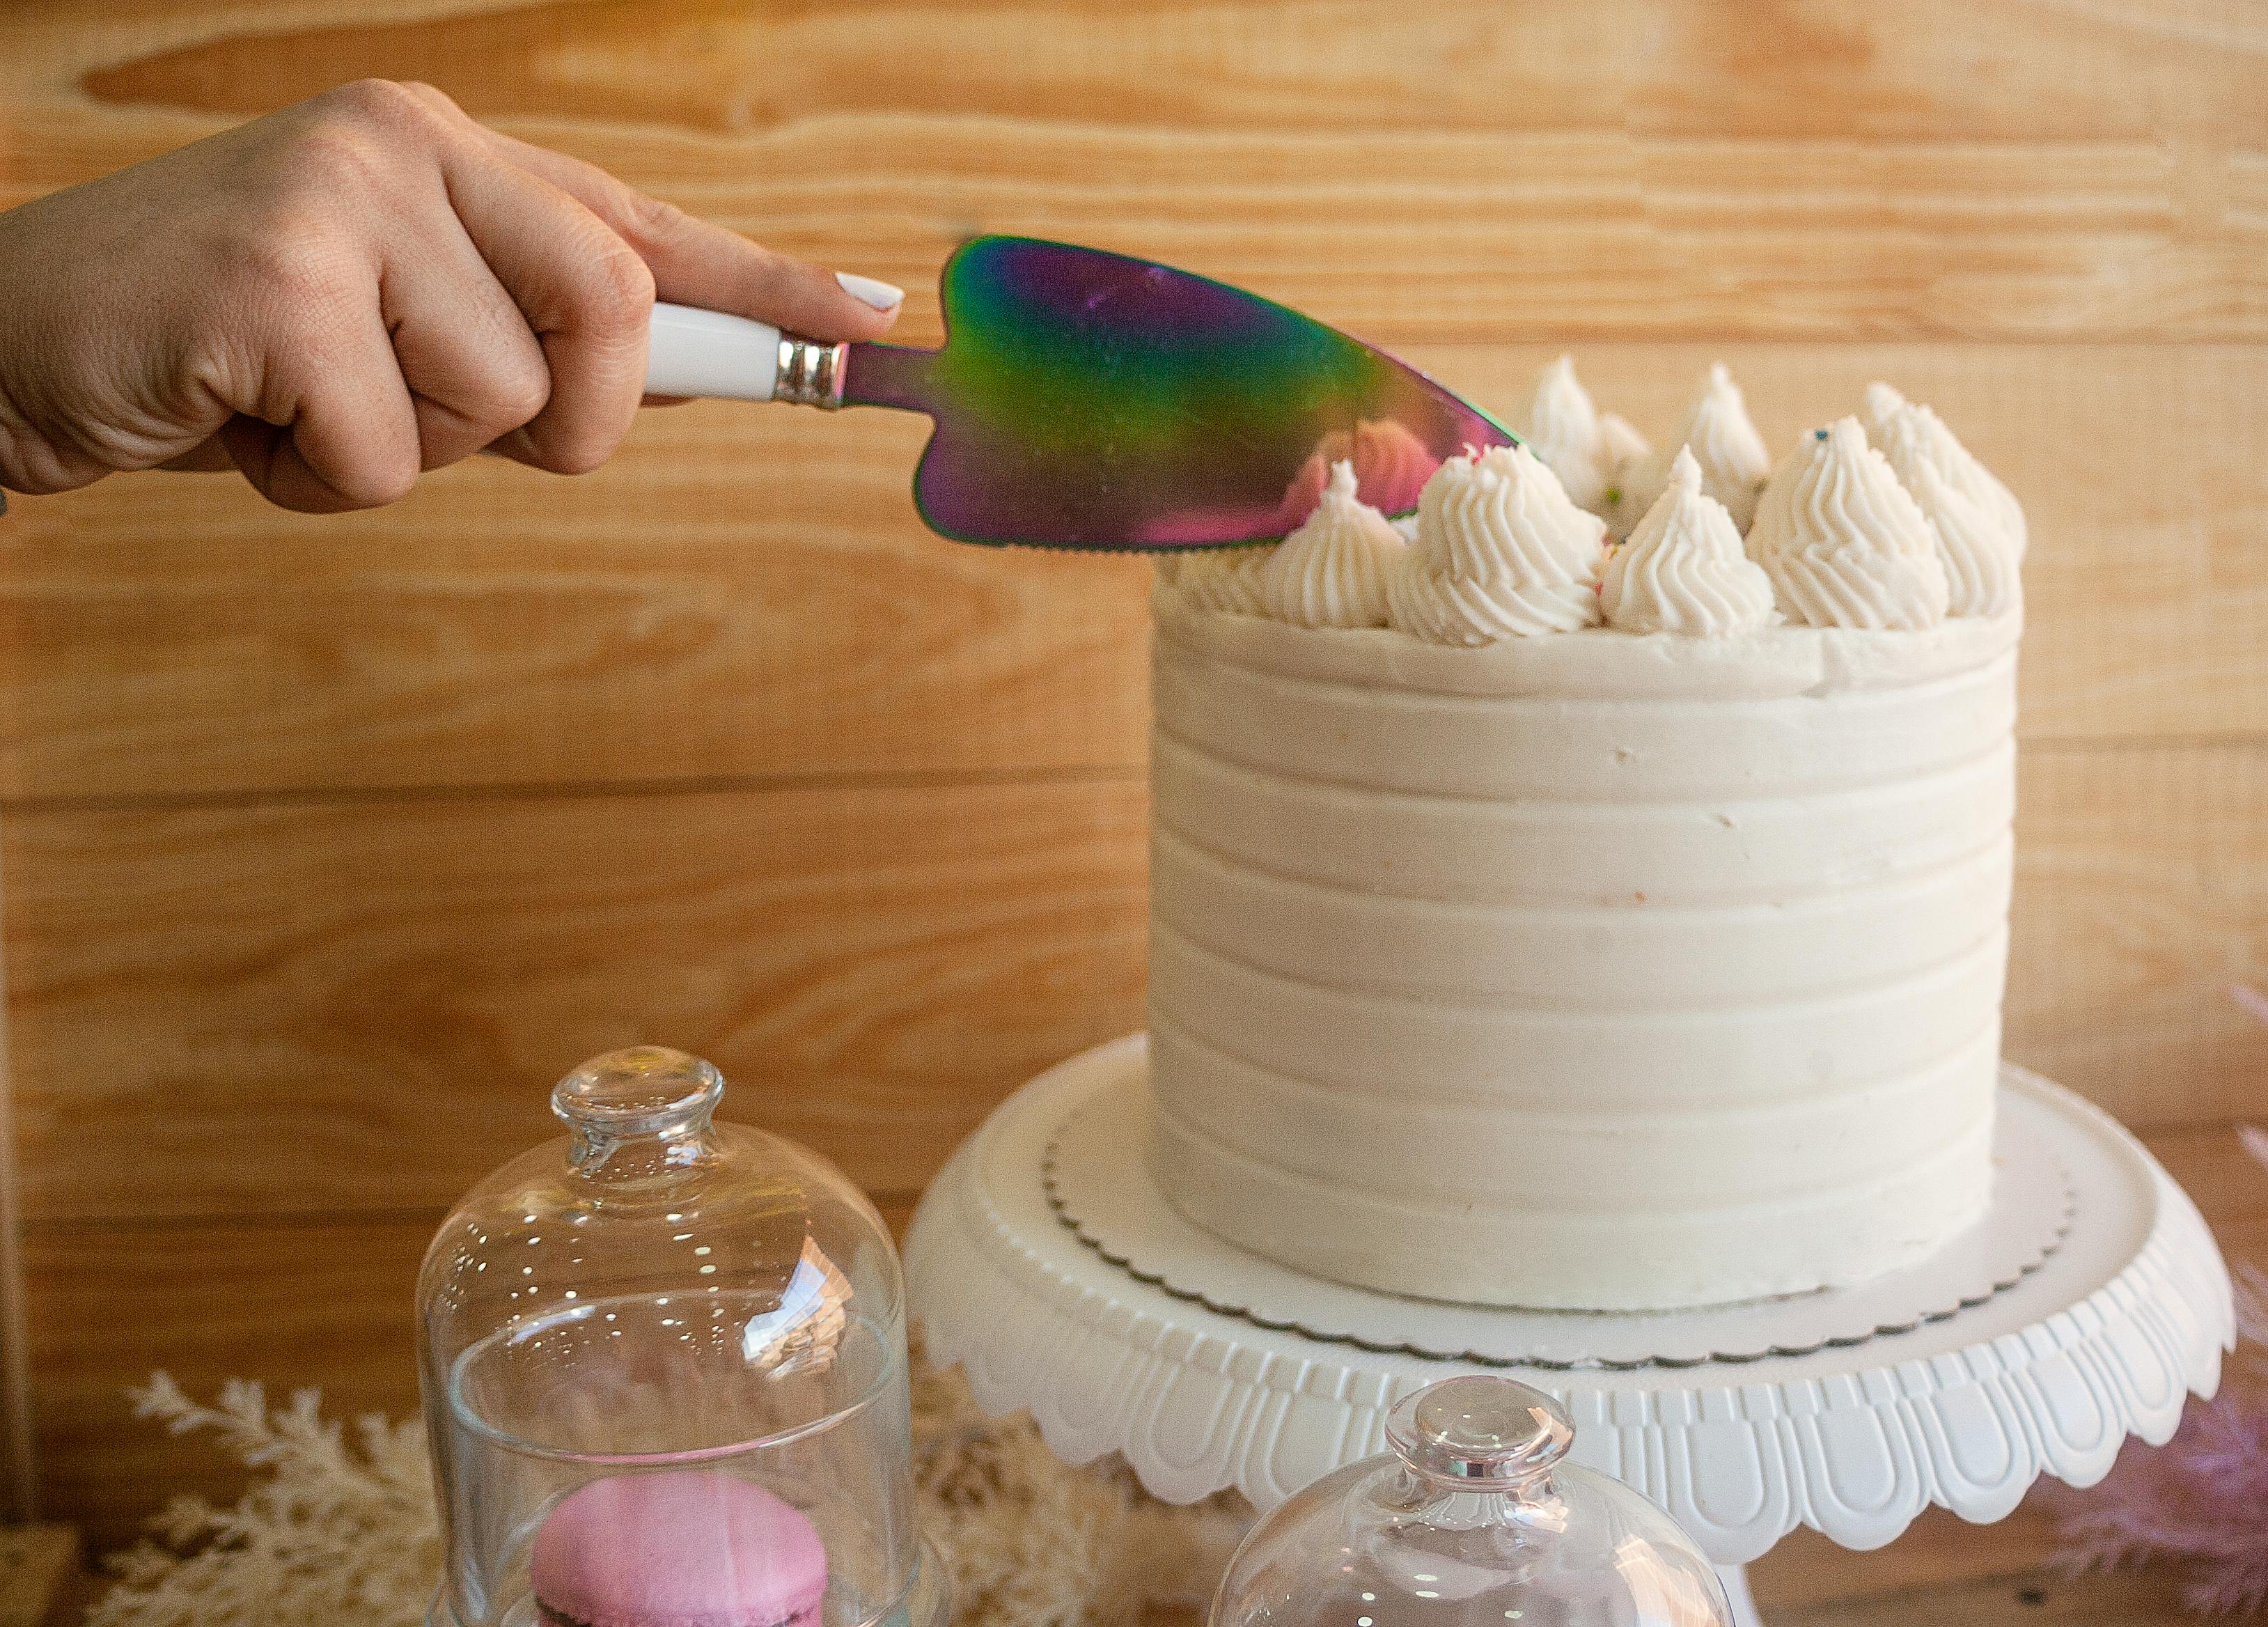 A woman cutting a cake | Source: Pexels